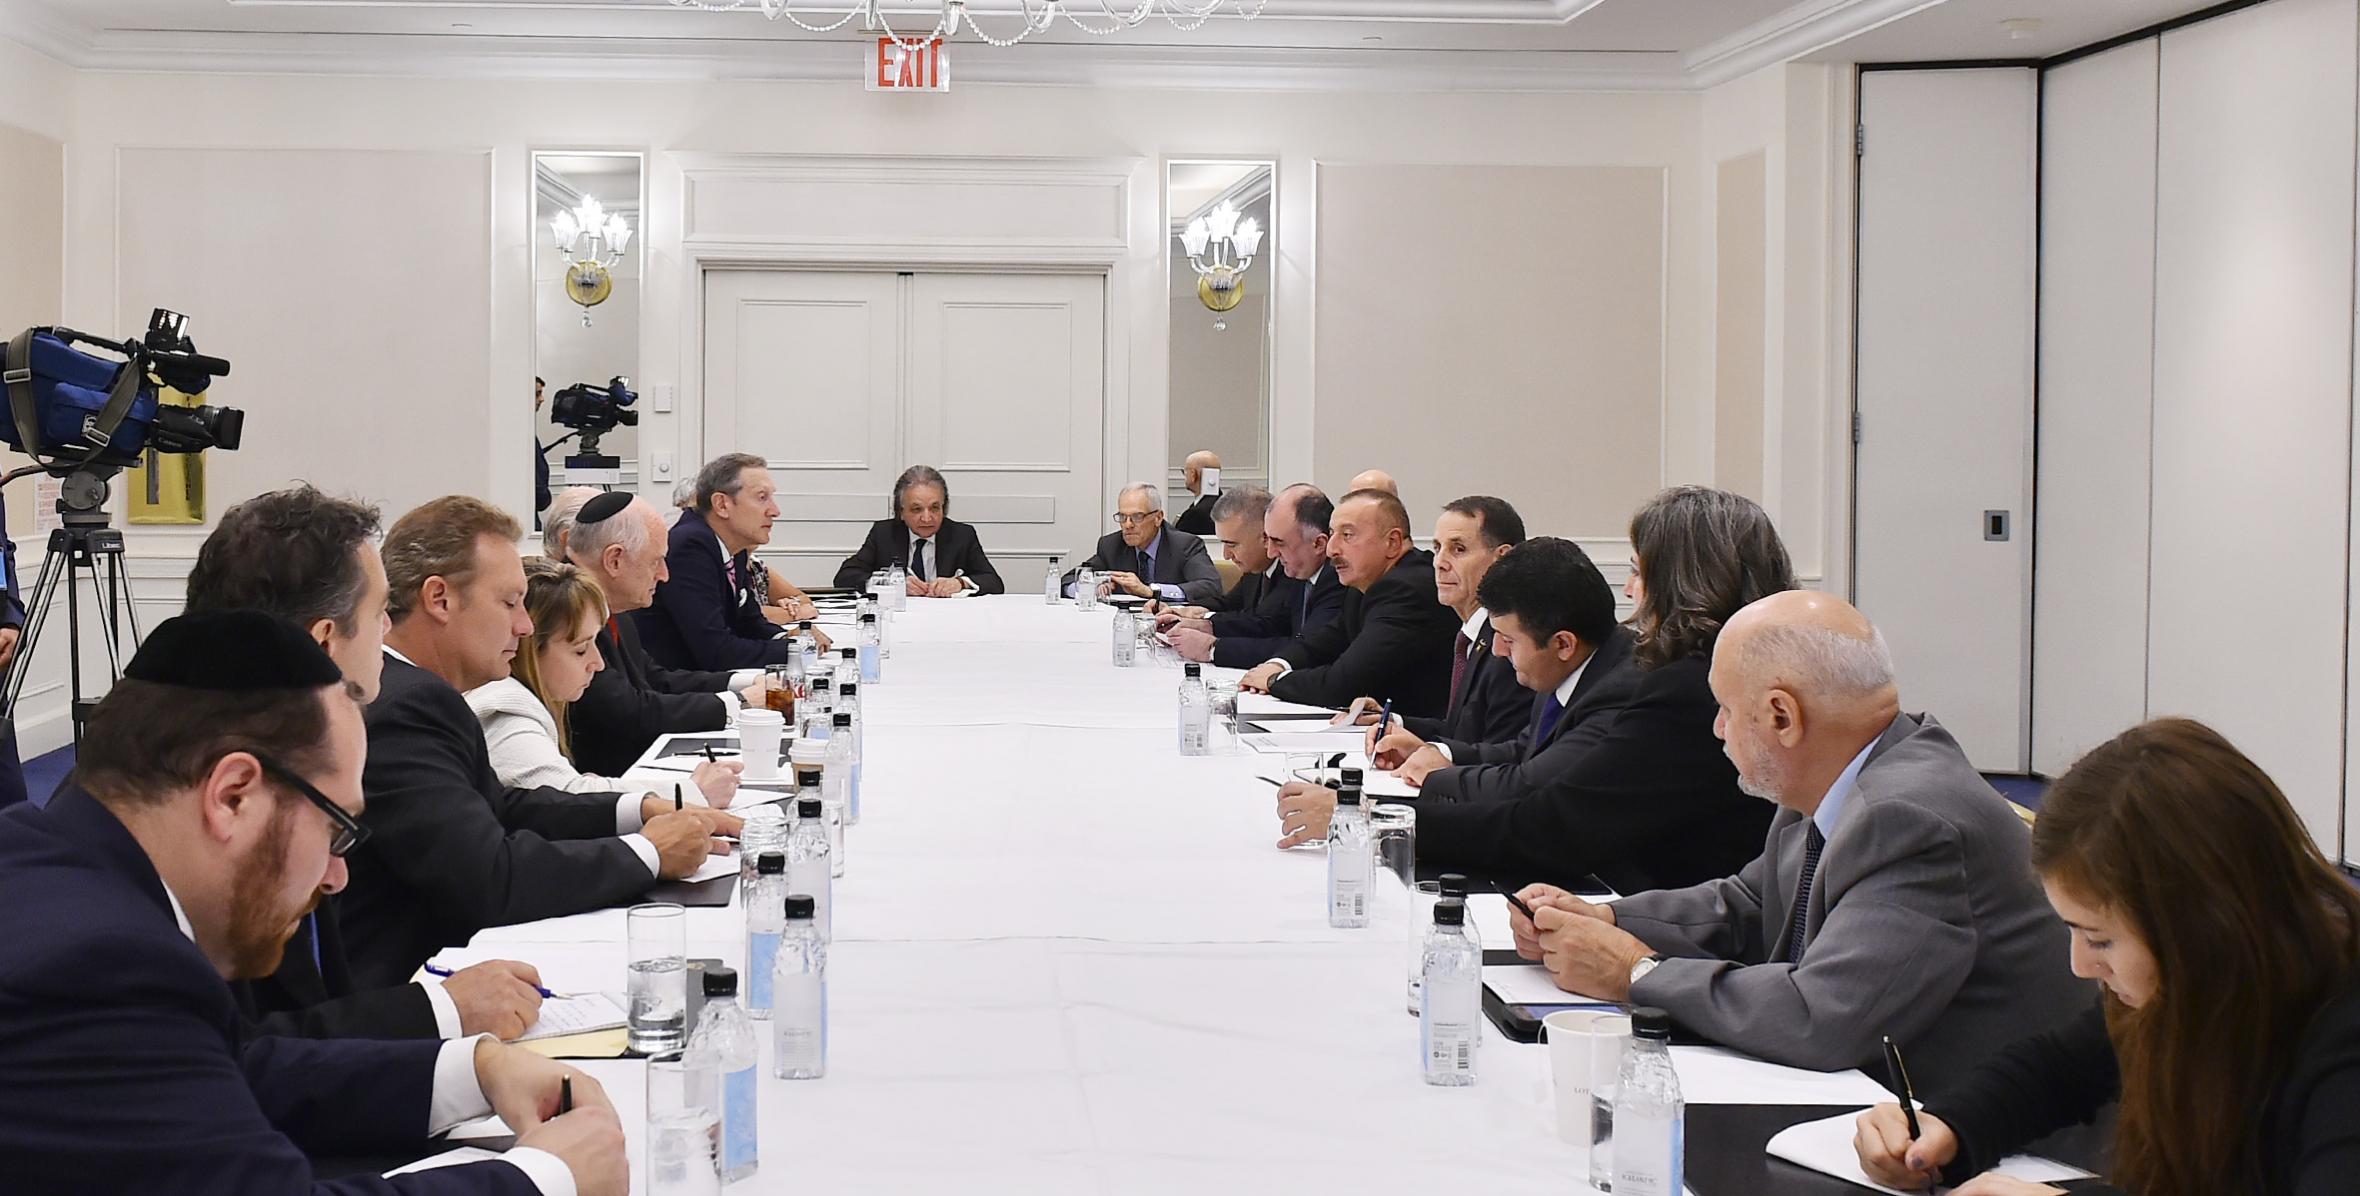 Ilham Aliyev met with representatives of American Jewish organizations in New York